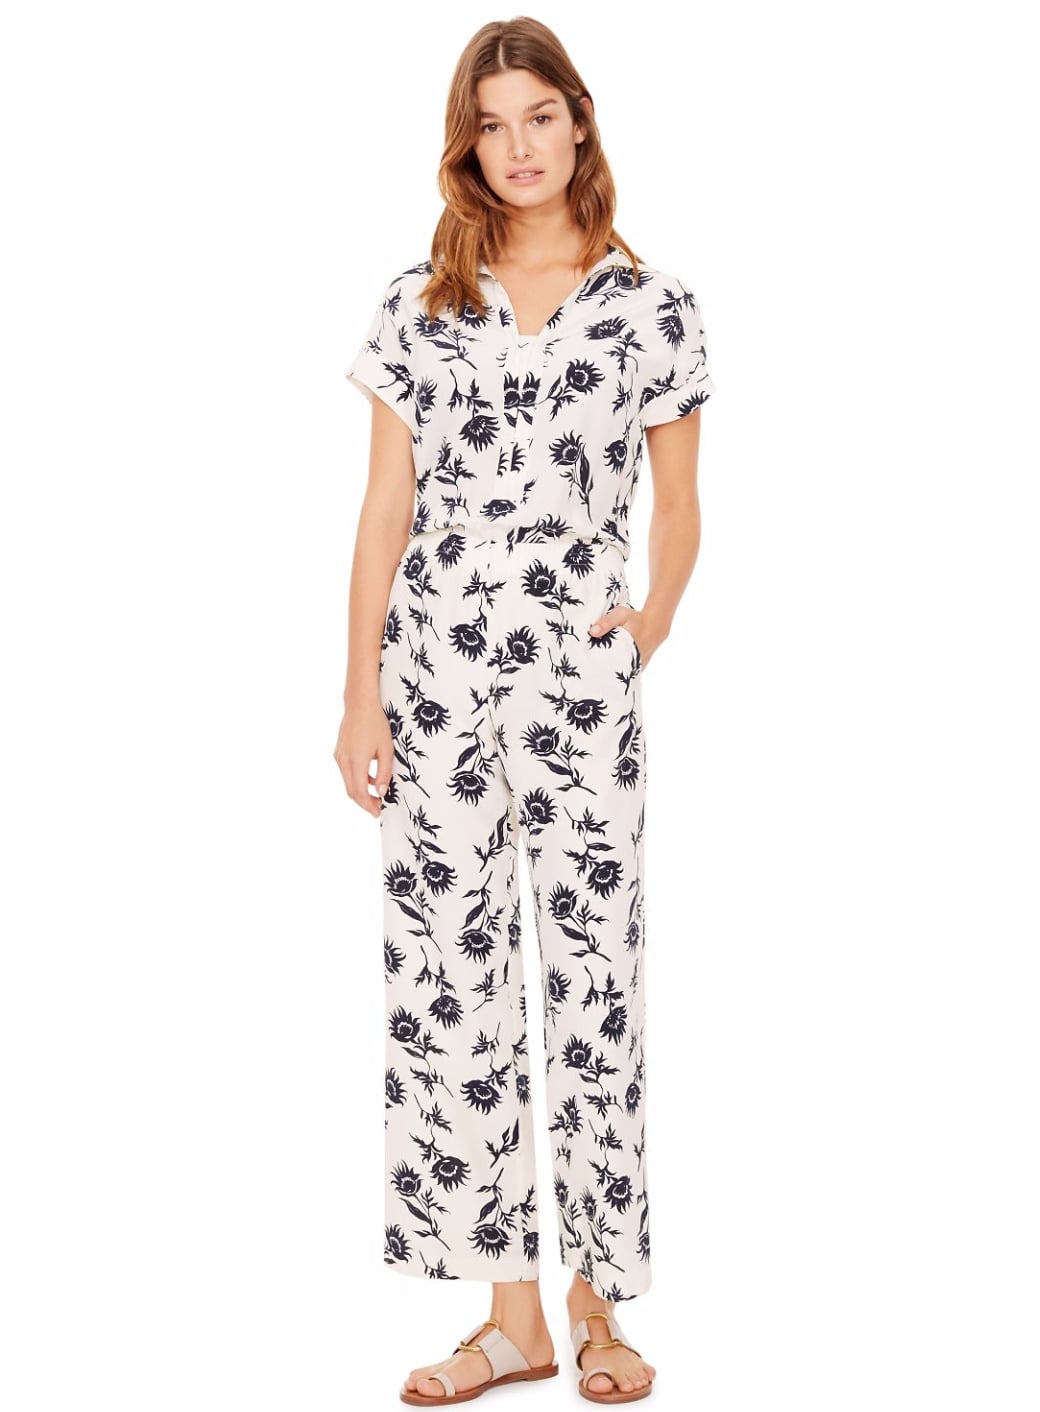 Tory Burch Silk Jumpsuit ($495) | The 1 Piece Every Lazy Girl Needs |  POPSUGAR Fashion Photo 11